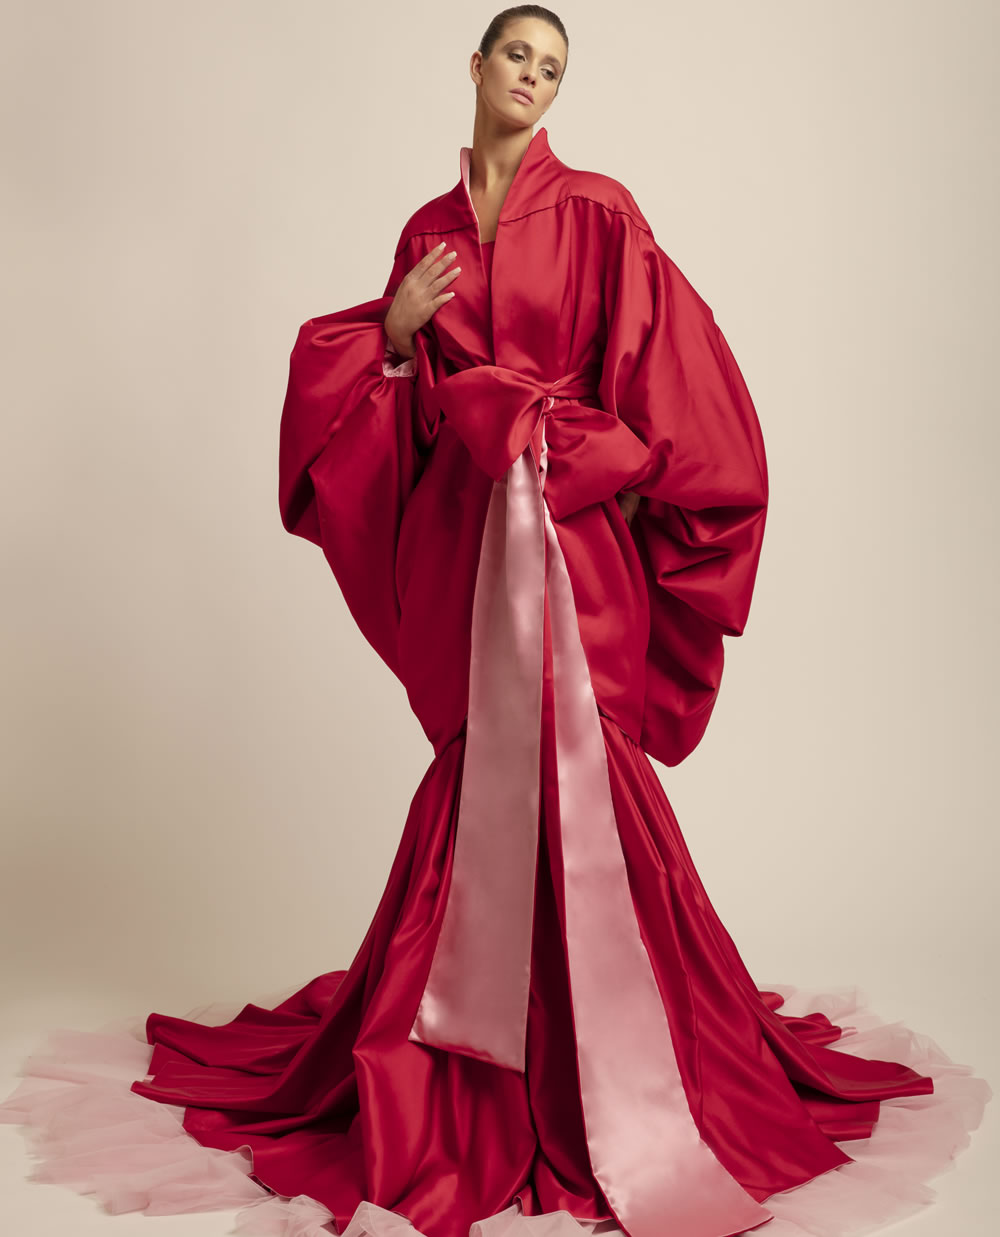 Benveniste Couture red dress